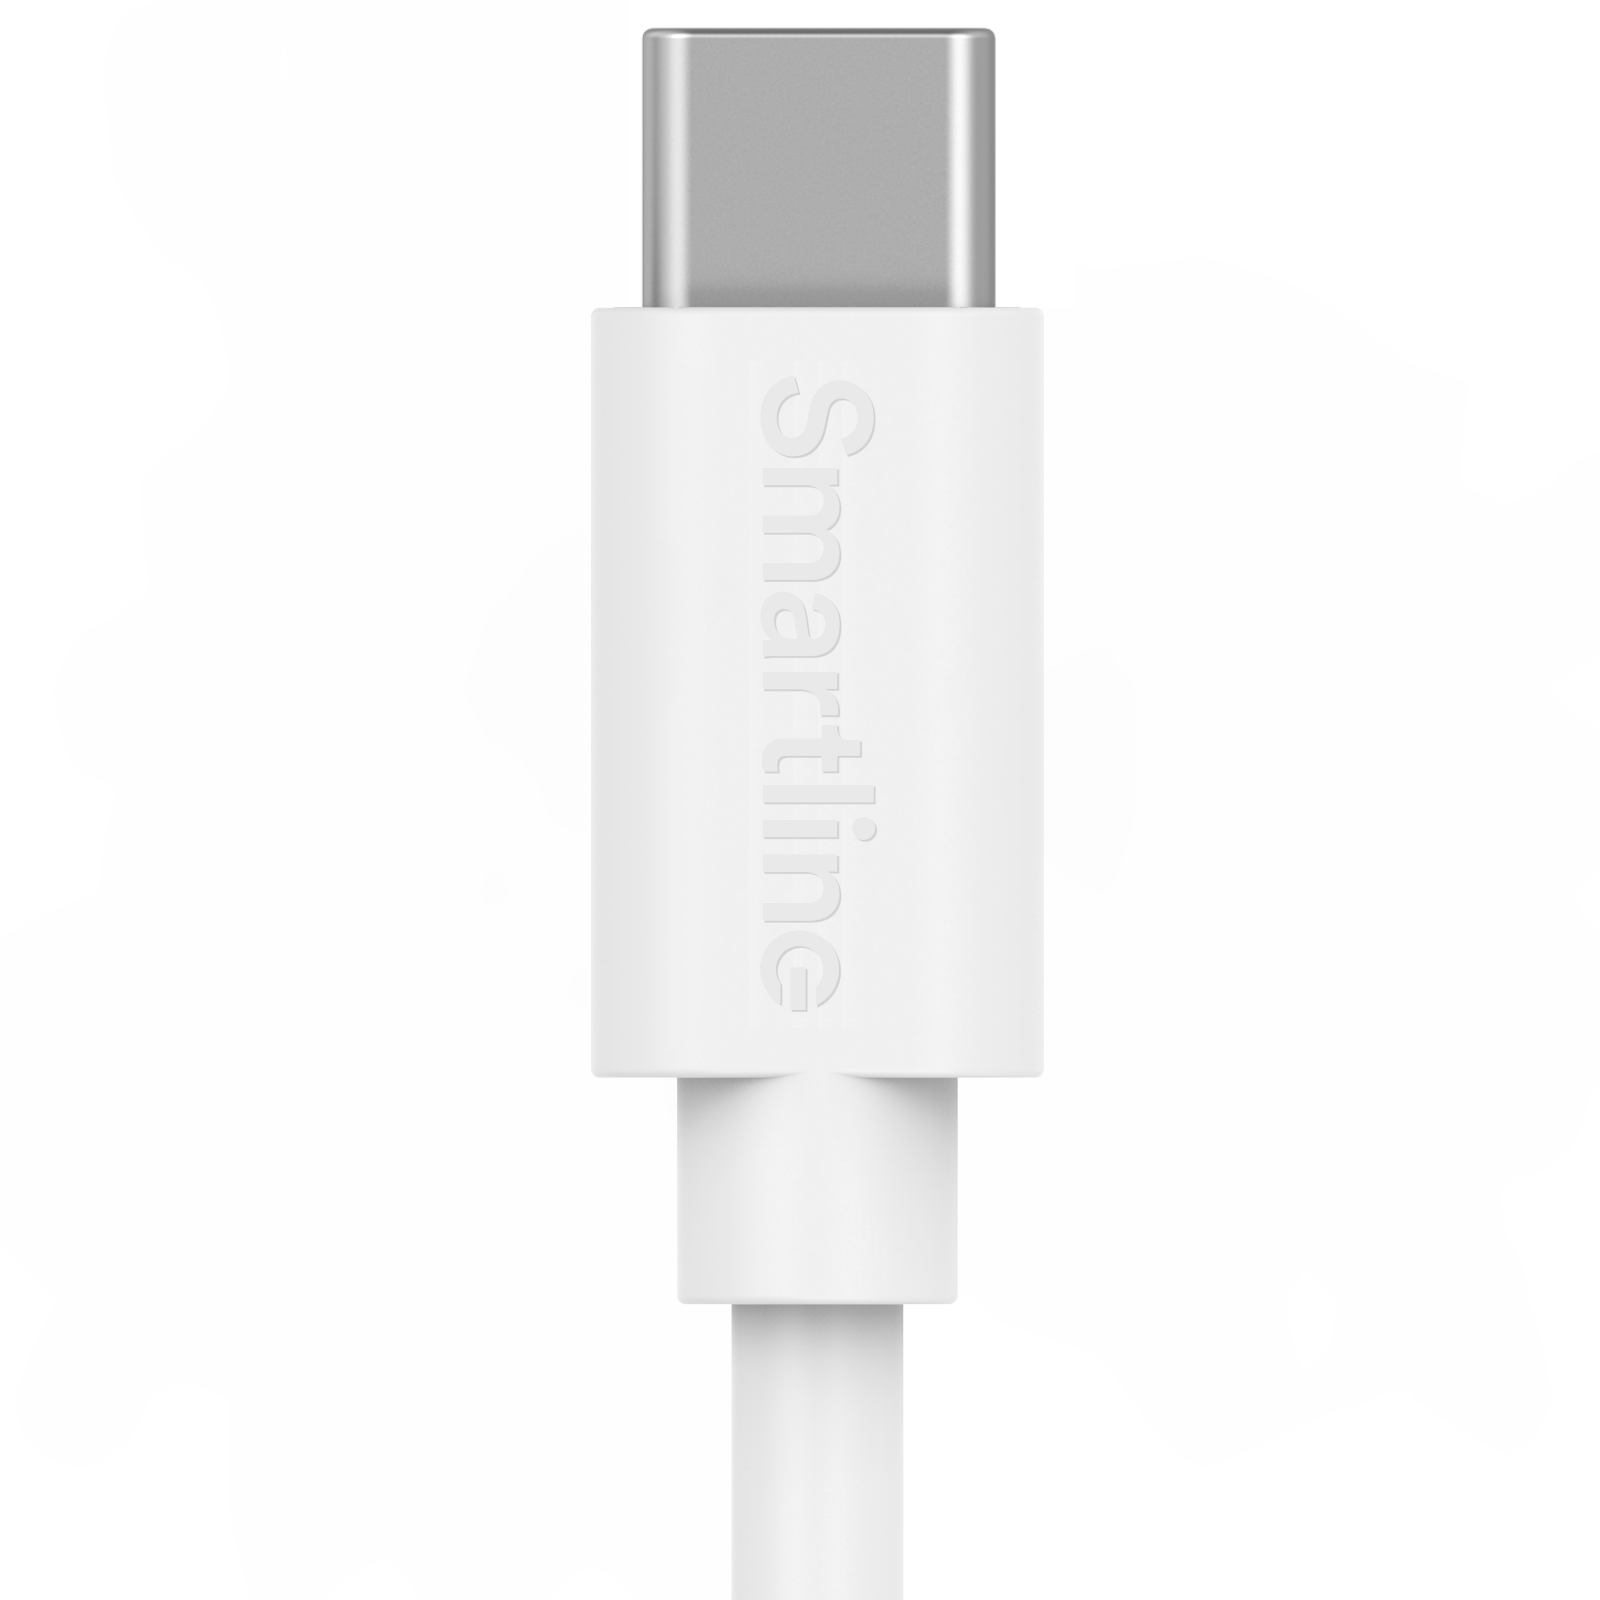 Cable USB-C a USB-C 3 metros blanco